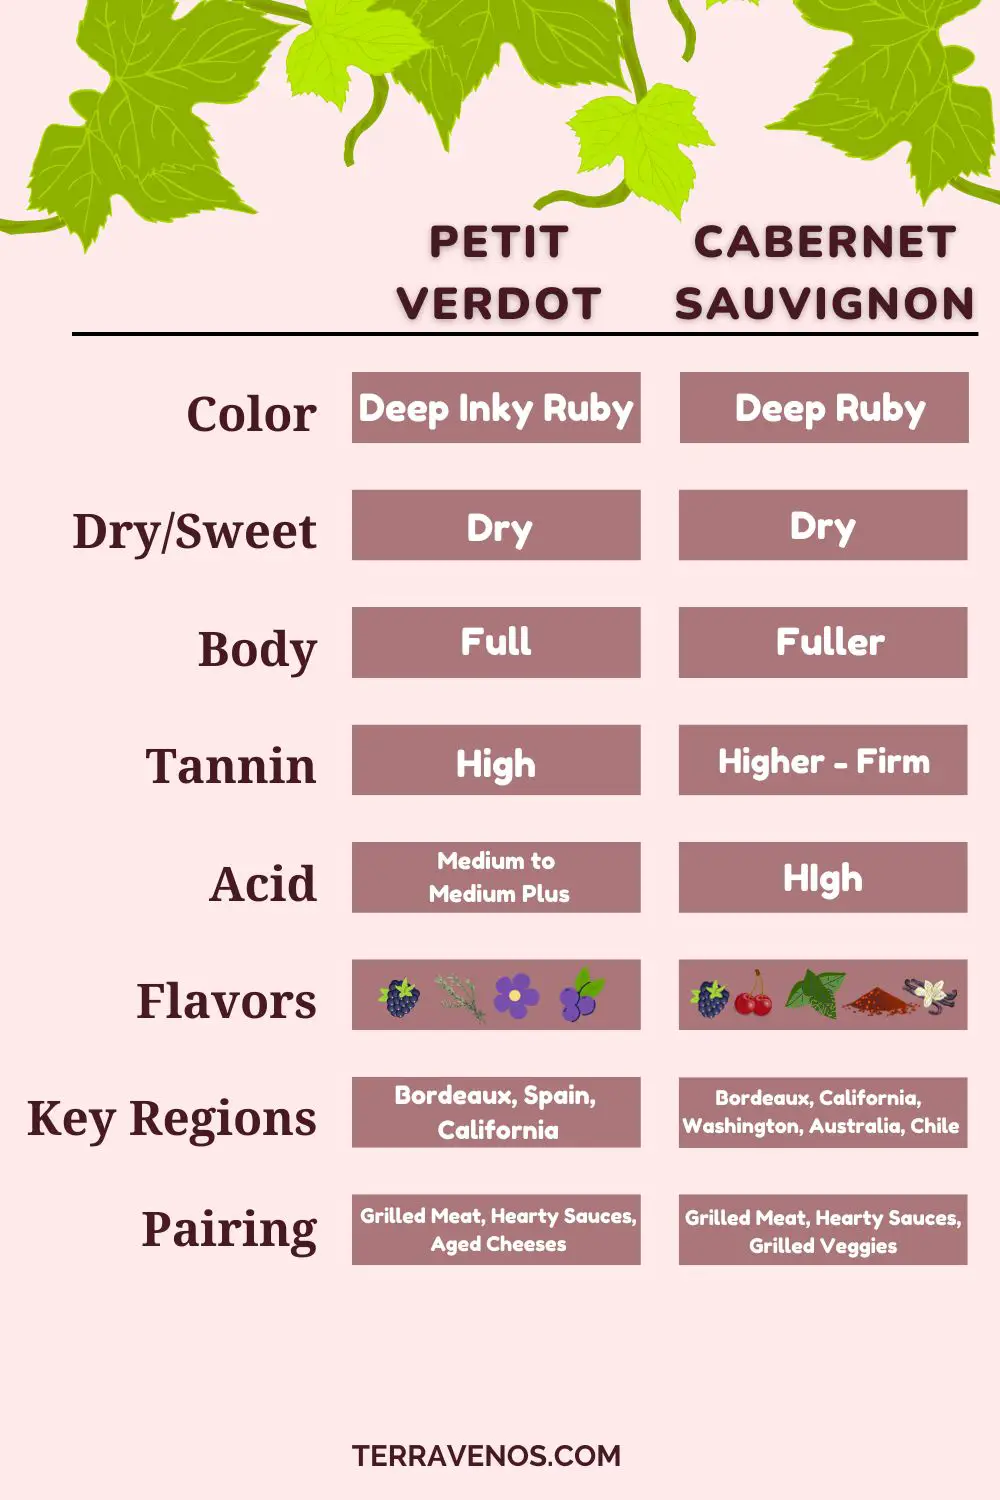 petit verdot vs cabernet sauvignon wine comparison infographic